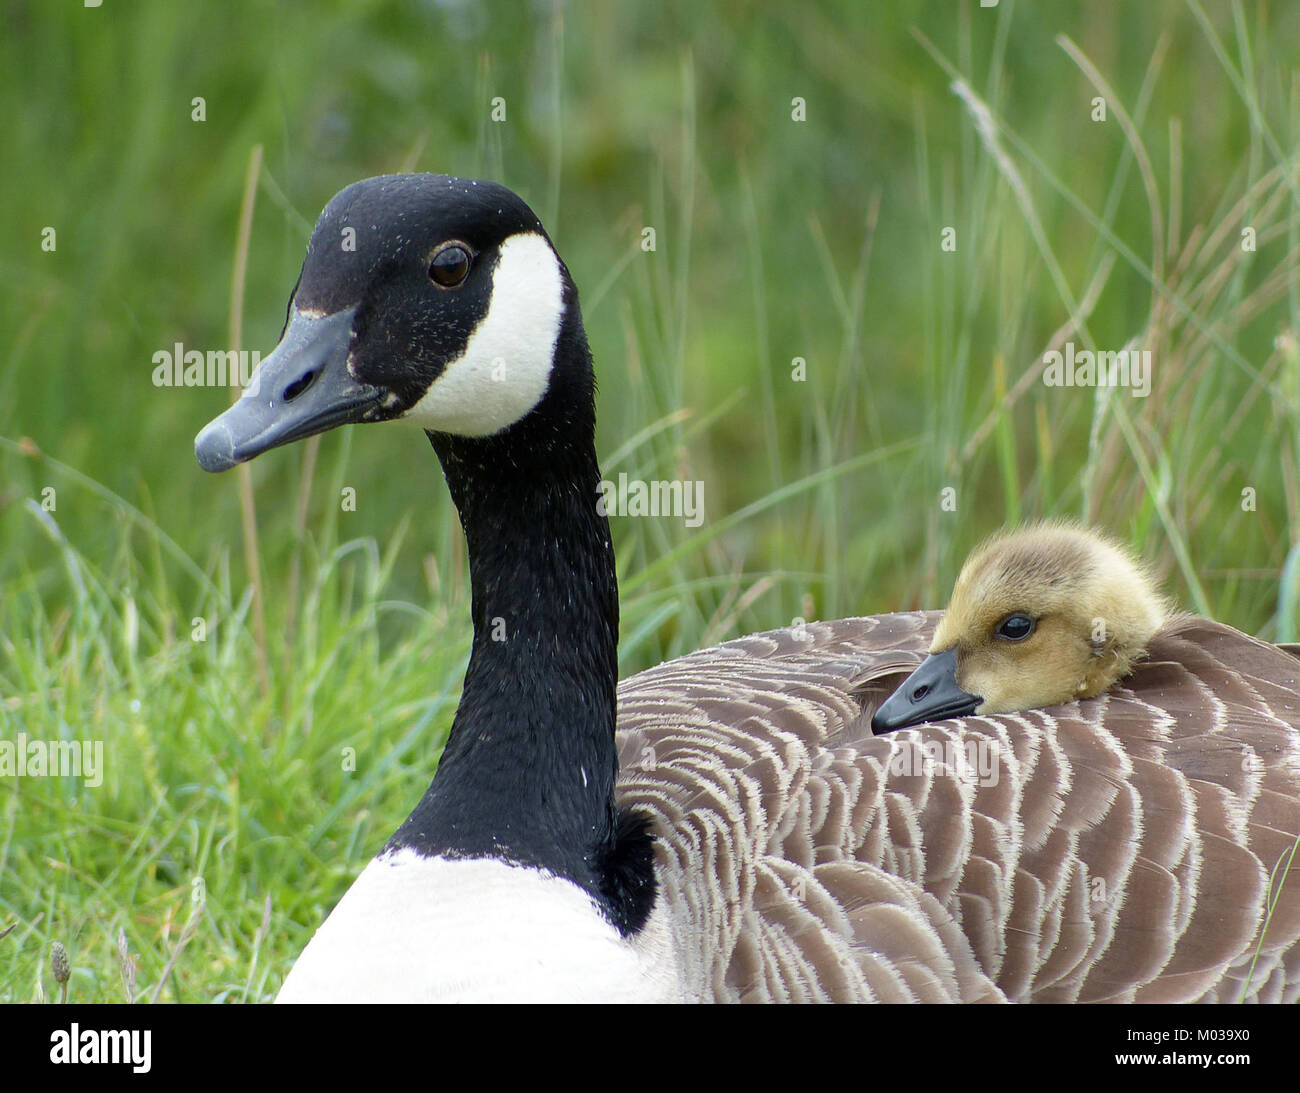 Canada Goose with gosling on back Stock Photo - Alamy